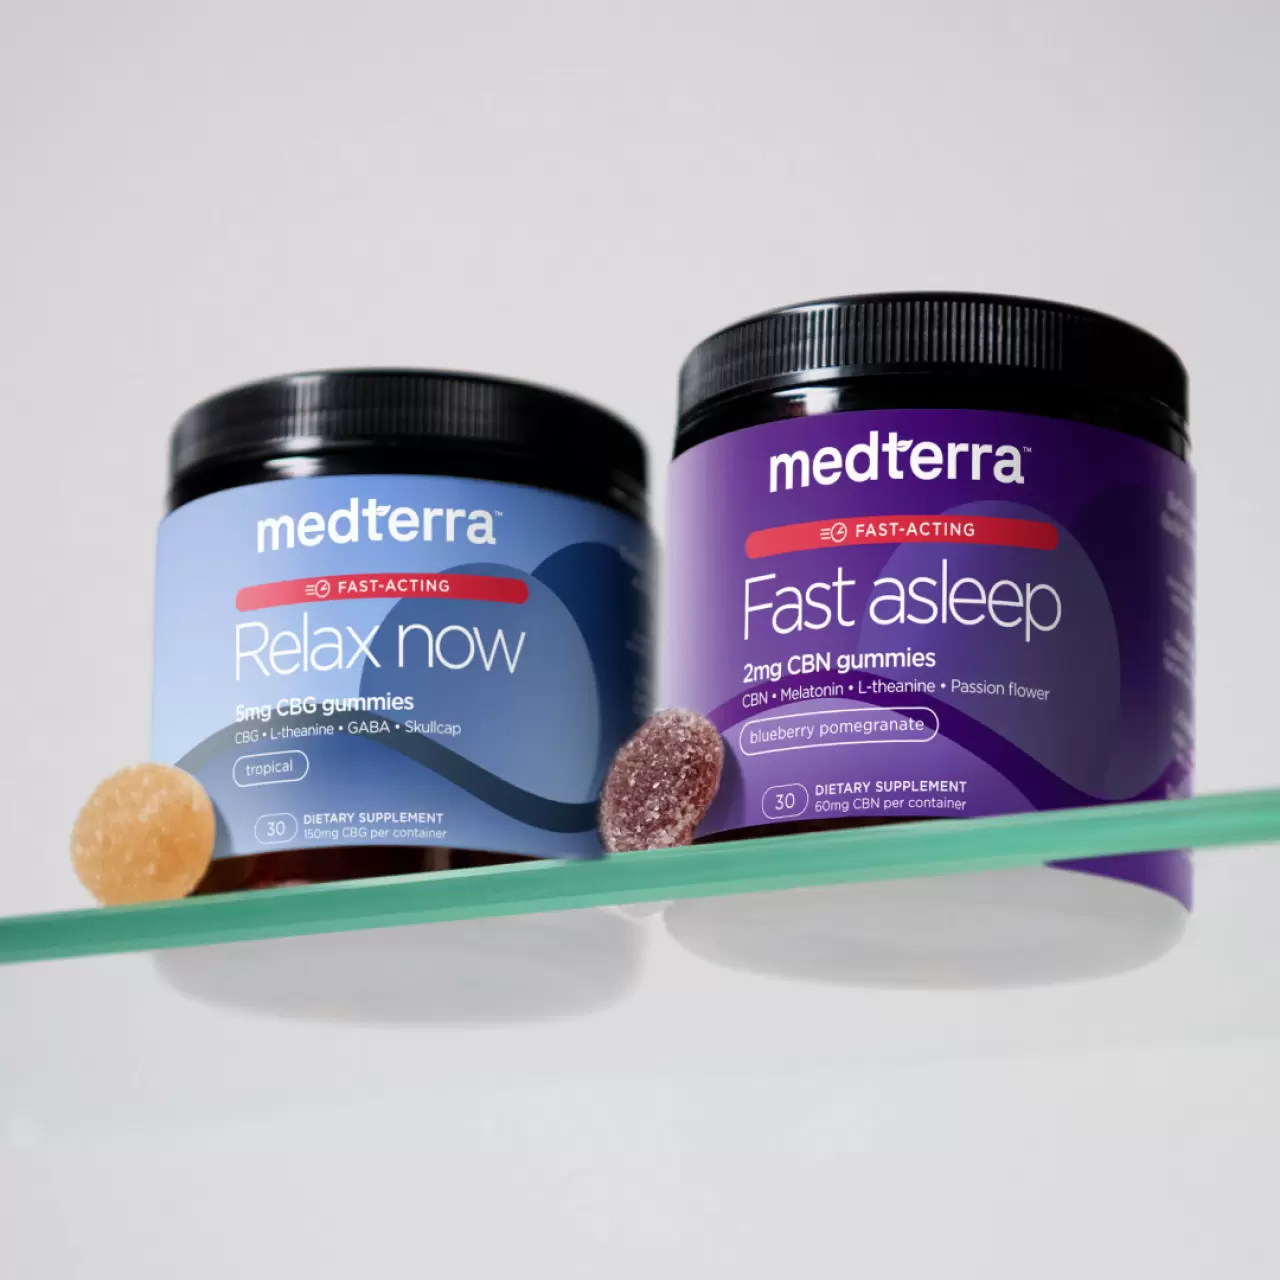 Medterra launches groundbreaking fast-acting Wellness Gummies